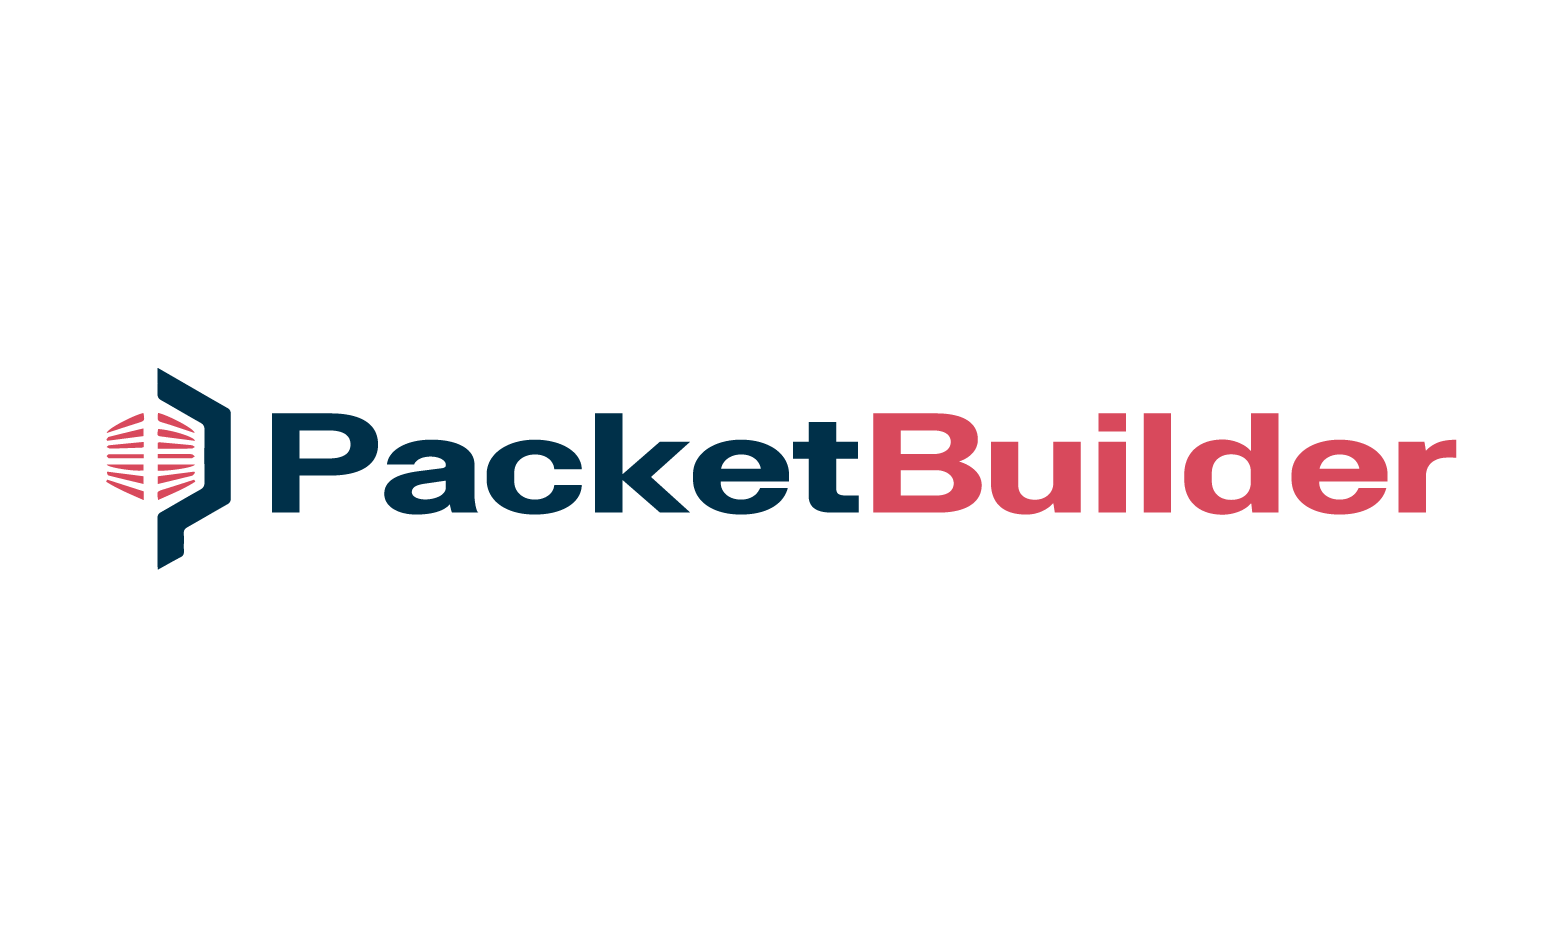 PacketBuilder.com - Creative brandable domain for sale